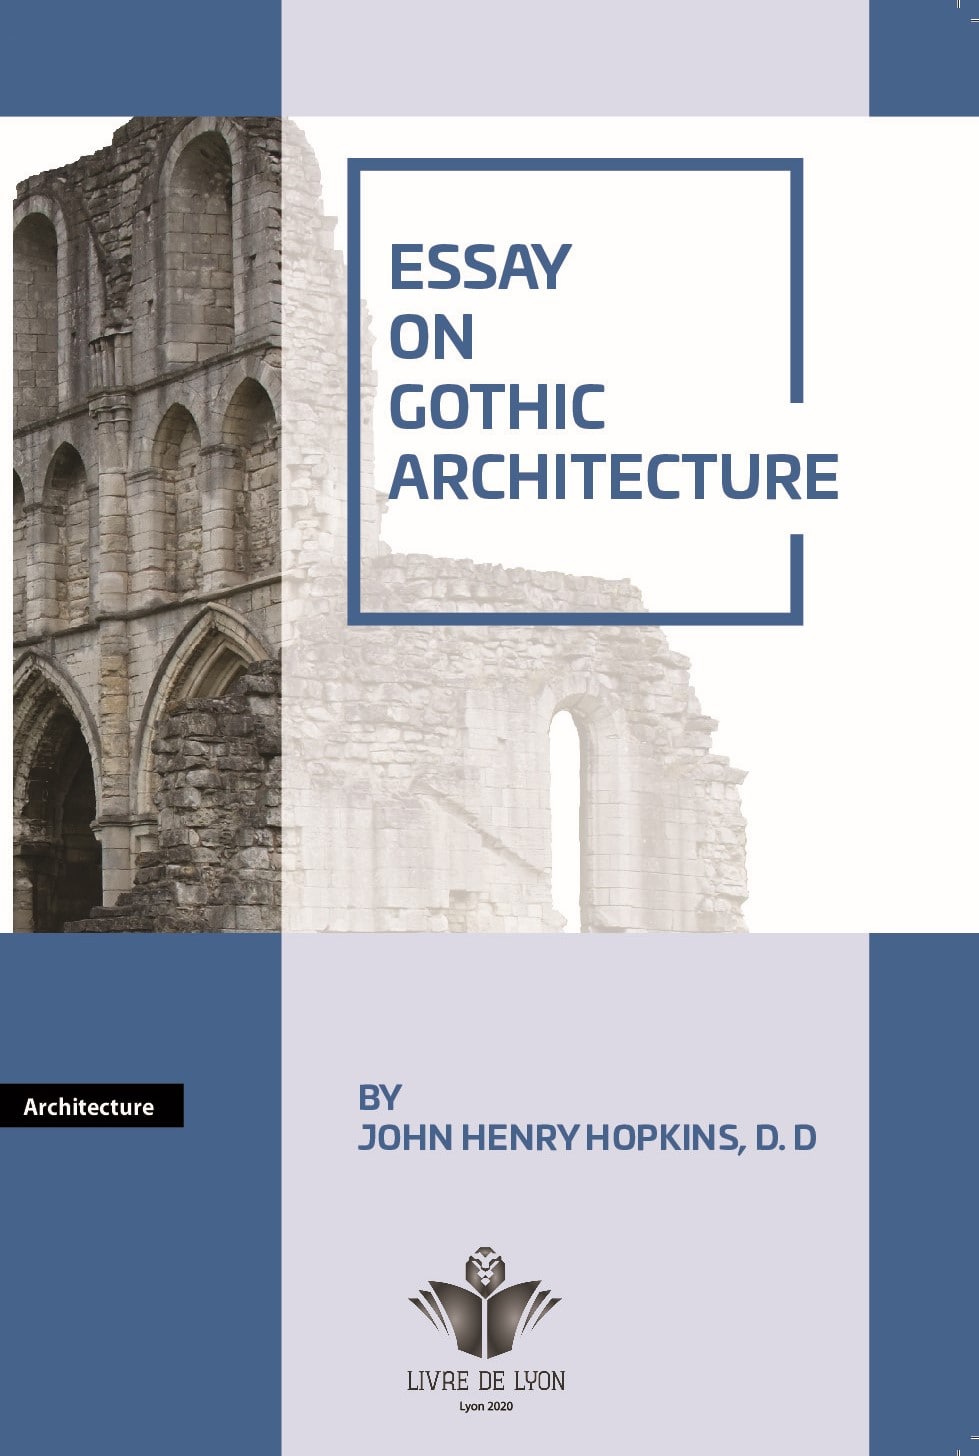 Essay on Gothic Architecture